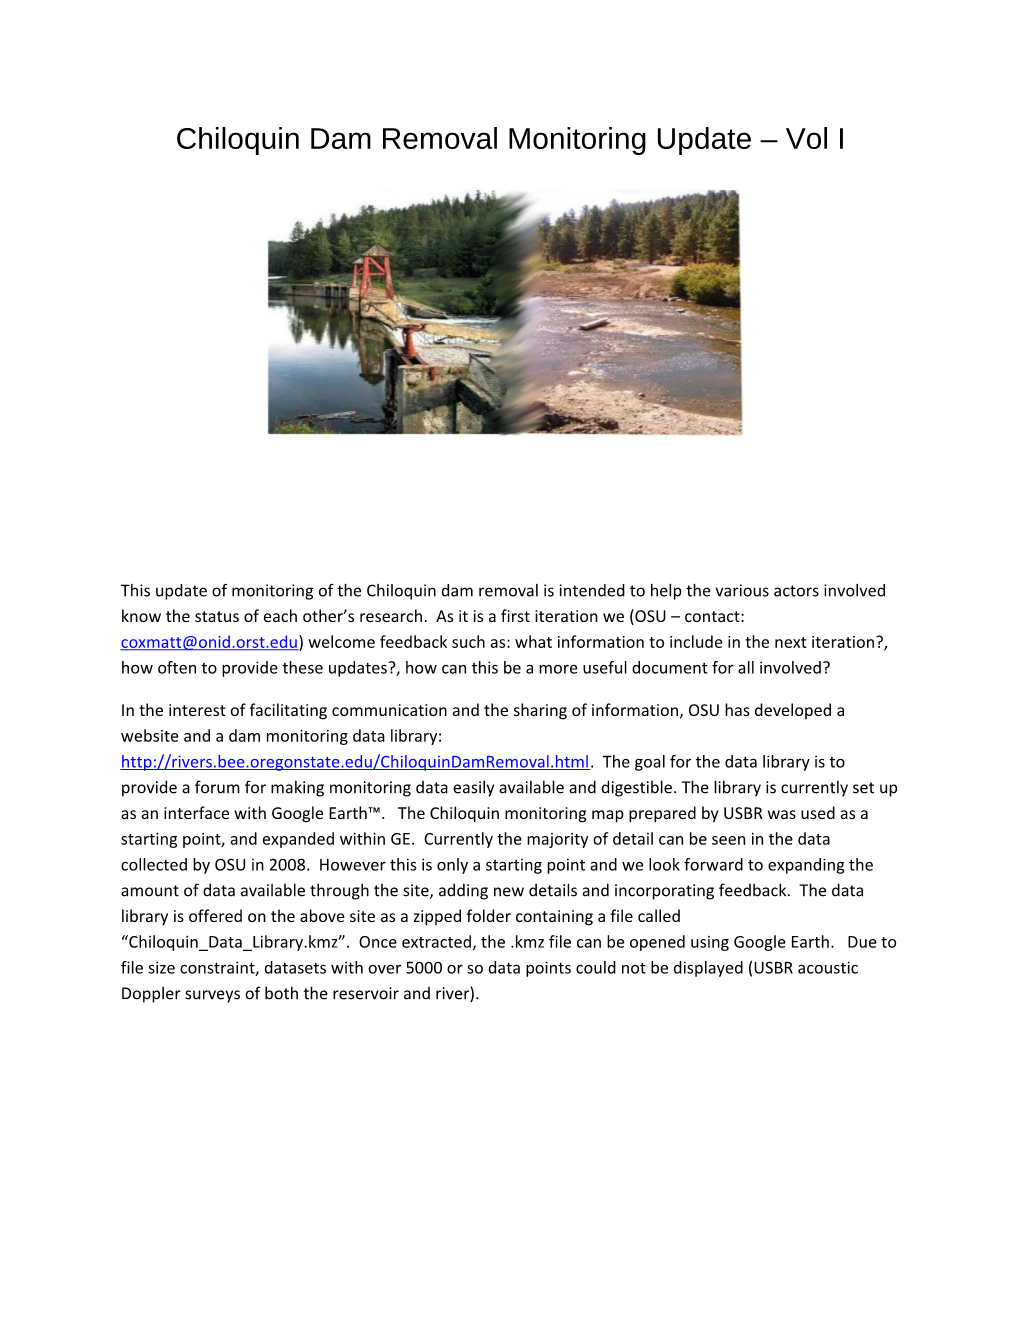 Chiloquin Dam Removal Monitoring Update Vol I